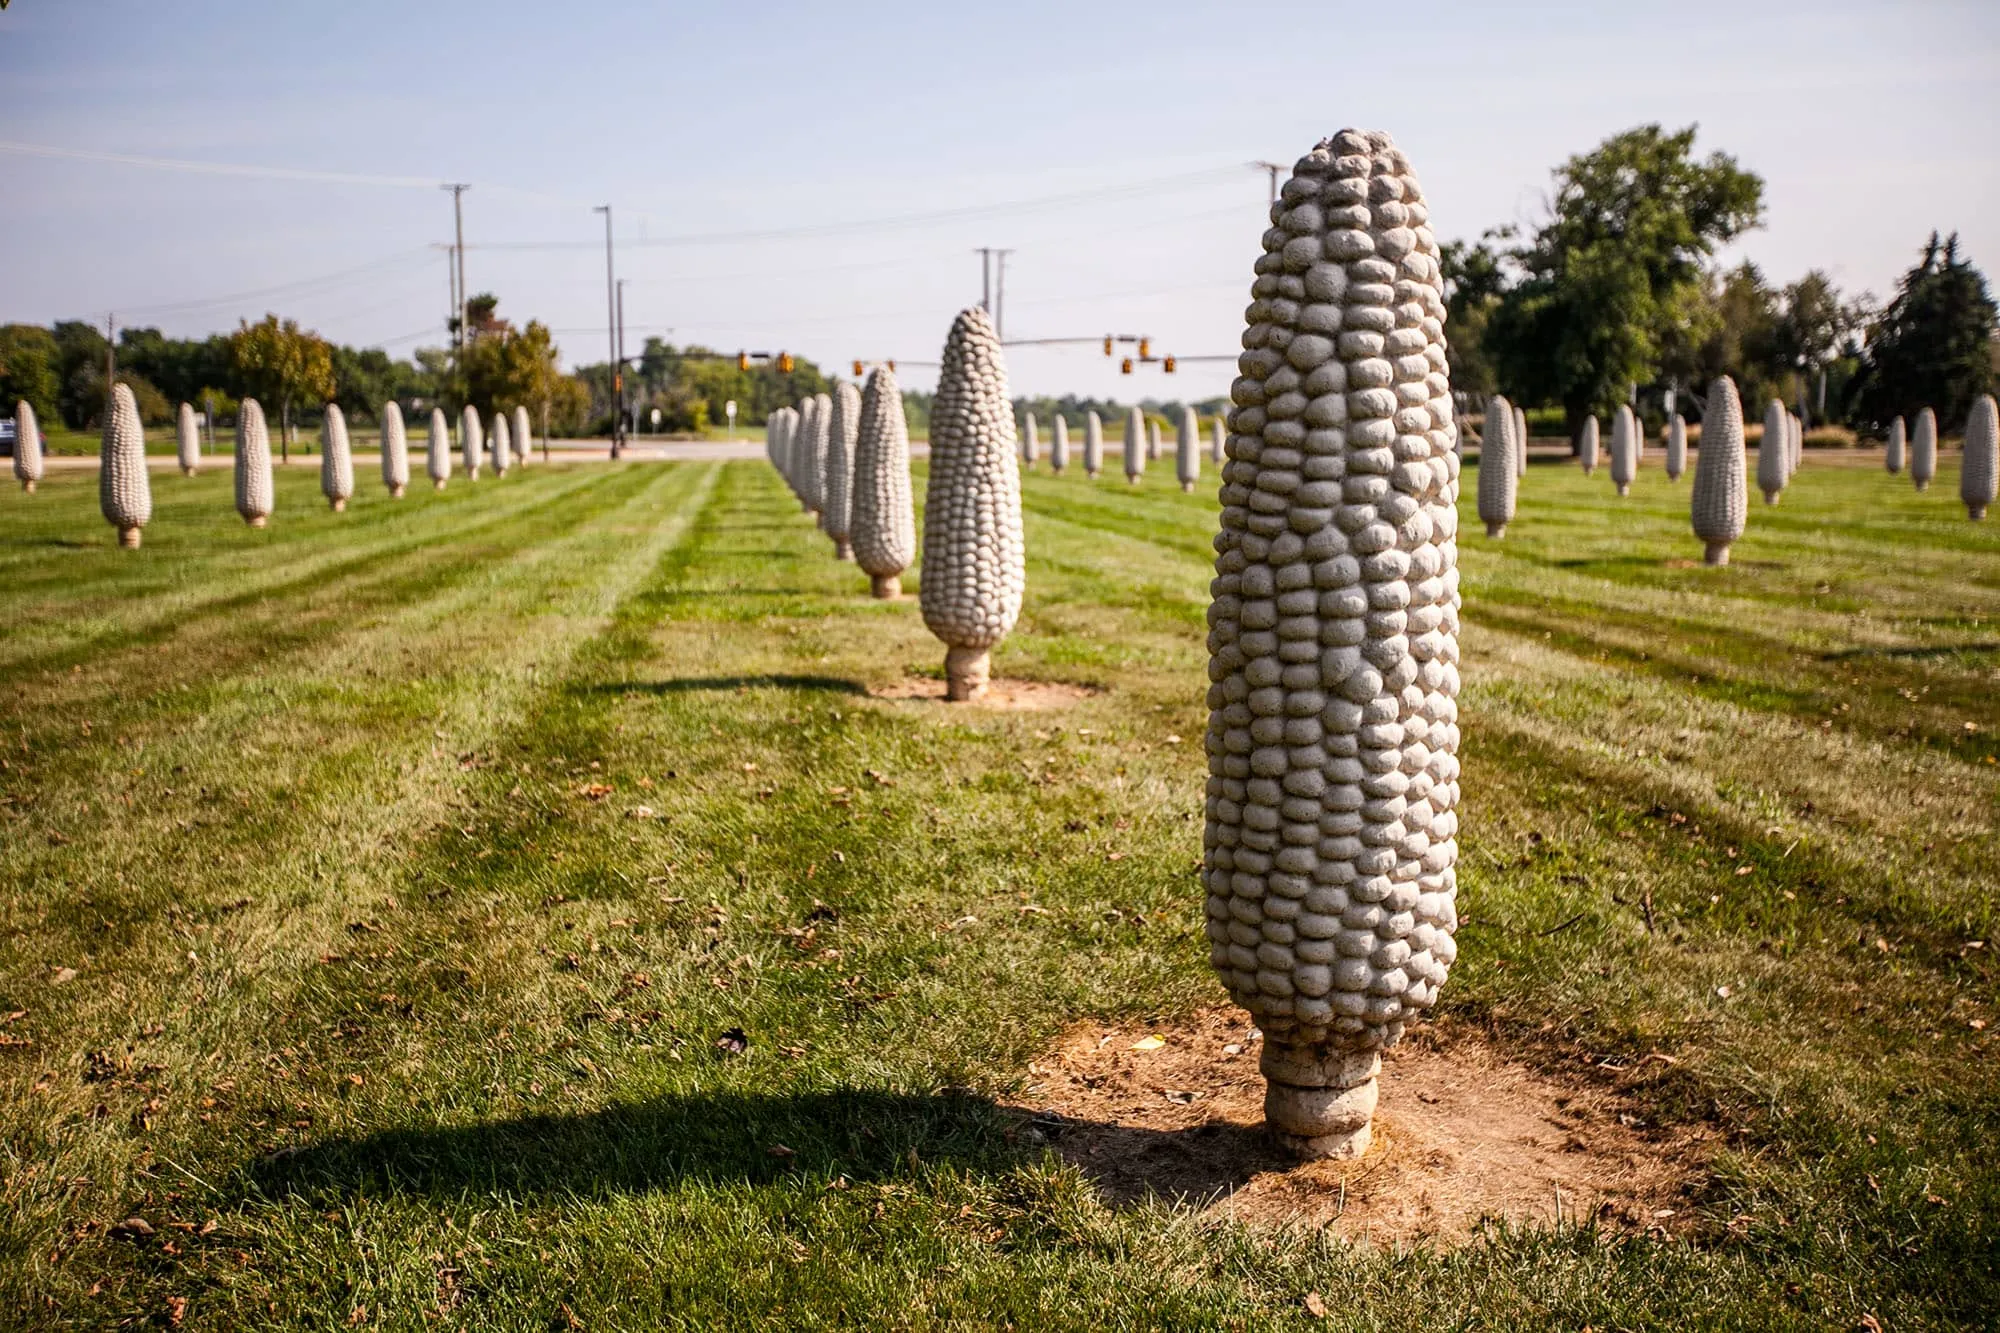 Field of Giant Corn Cobs in Dublin, Ohio